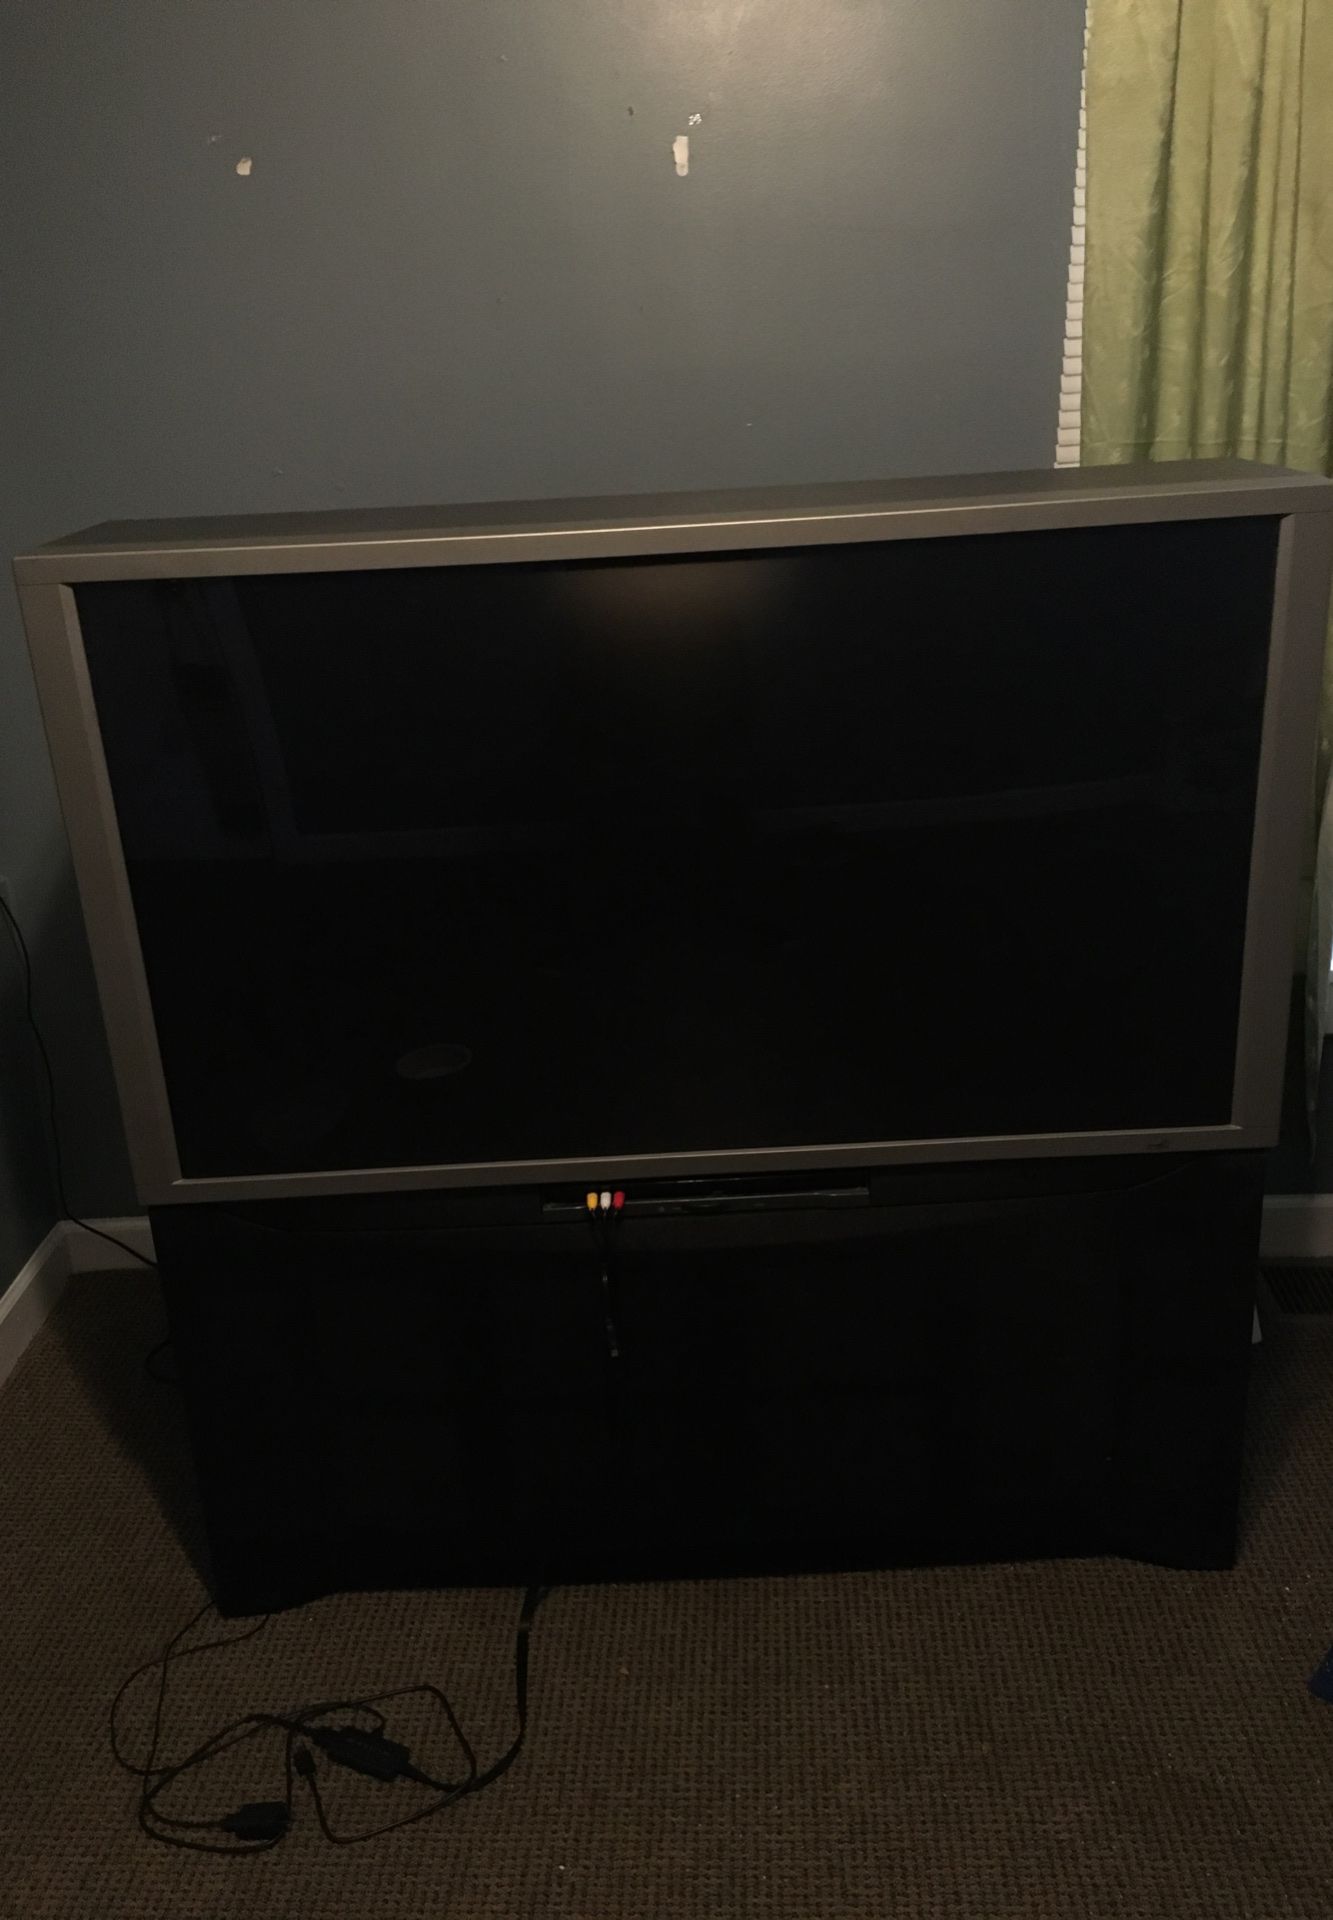 Big old school TV